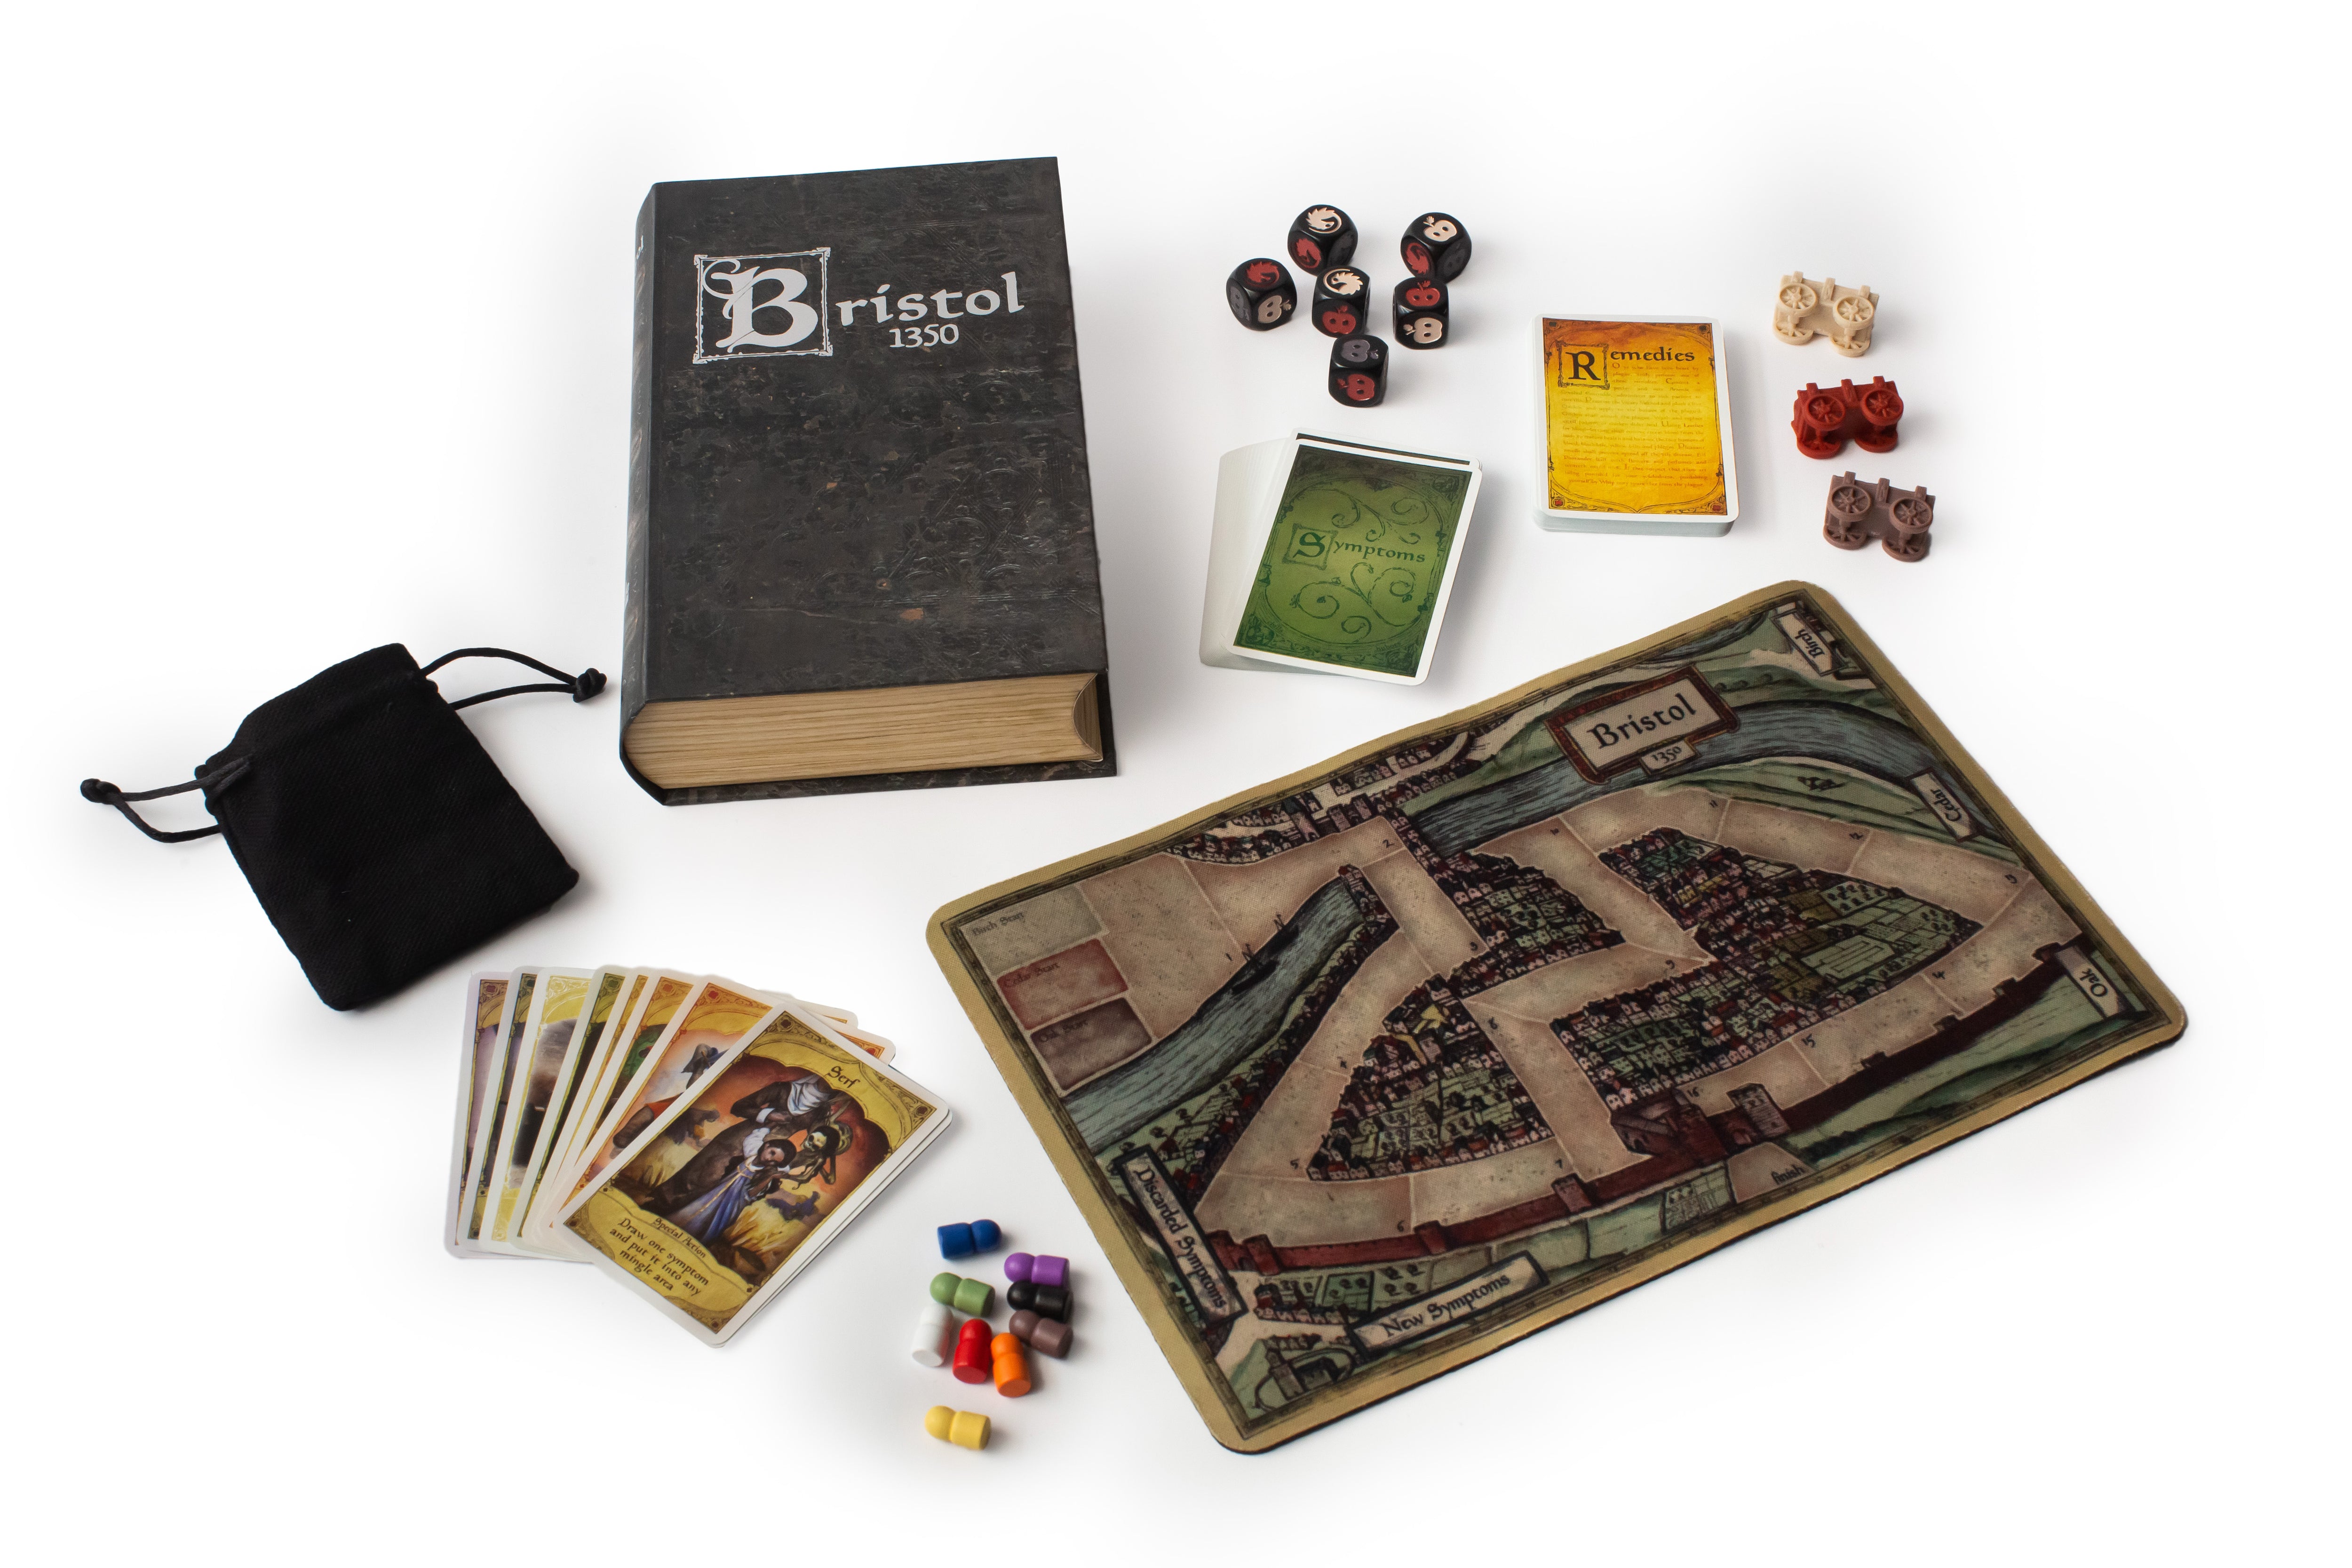 BRISTOL 1350 - Games of Berkeley